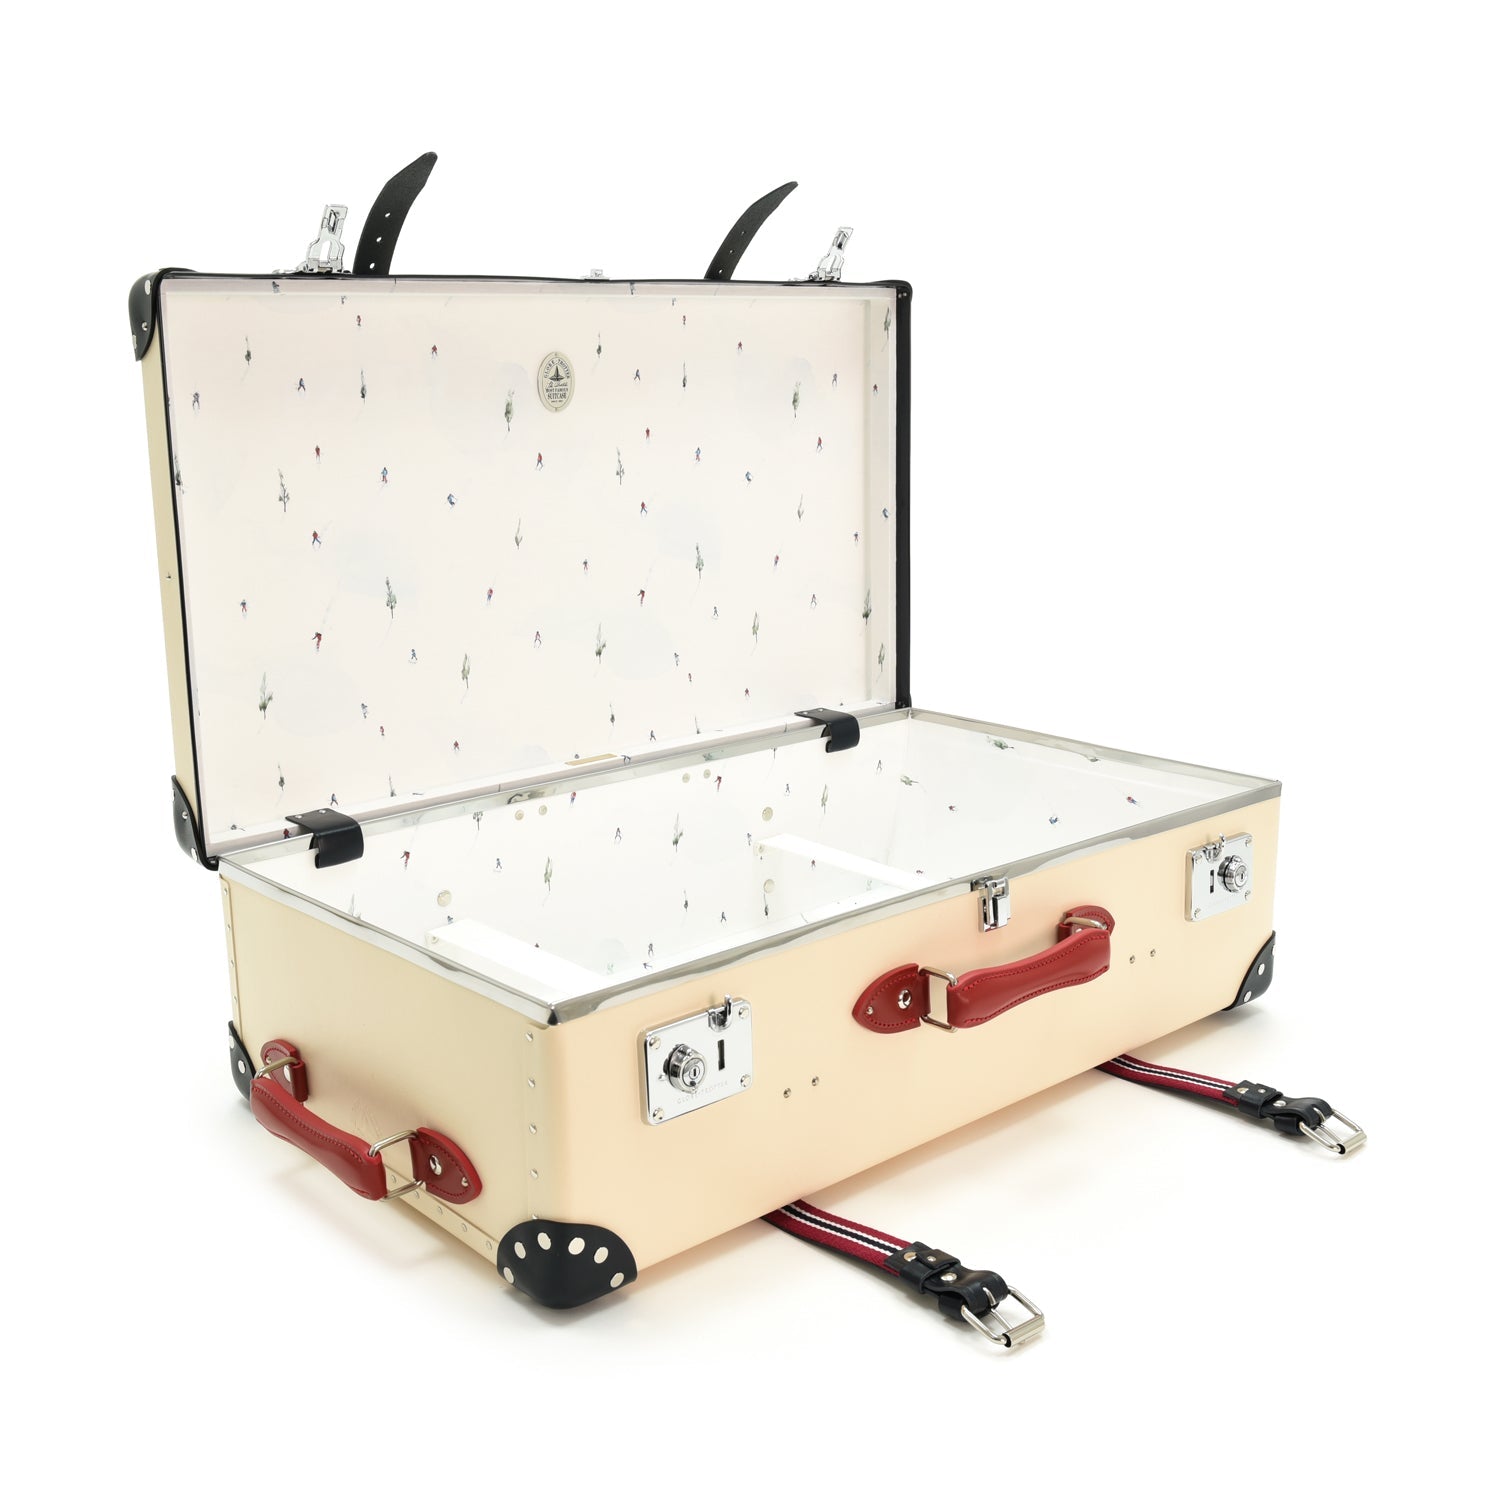 St. Moritz · Large Suitcase | Ivory/Navy & Red - GLOBE-TROTTER